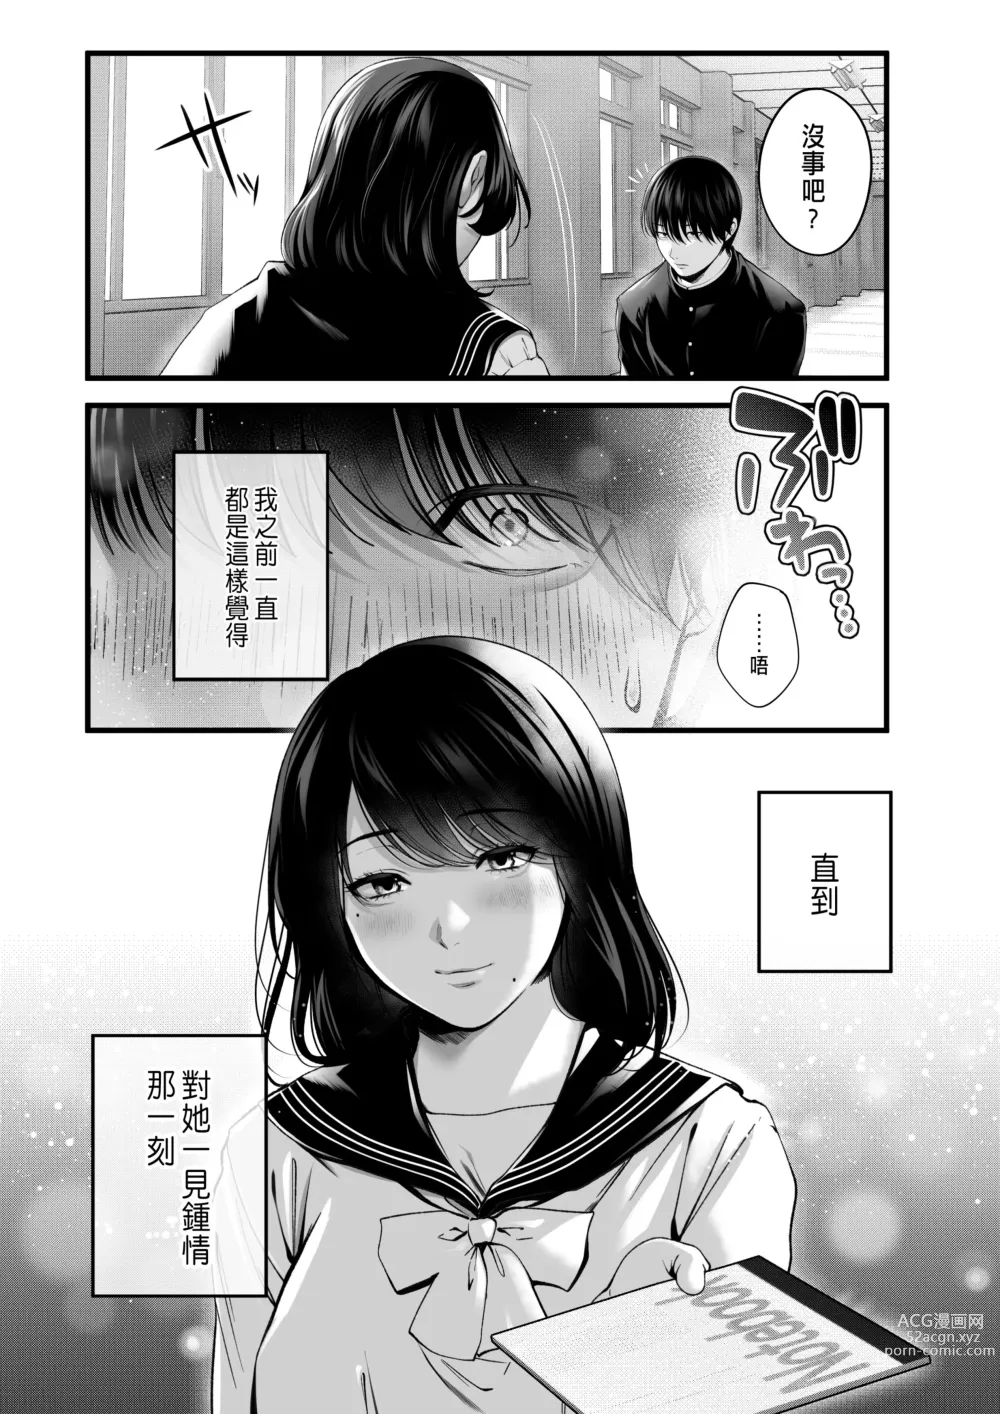 Page 5 of doujinshi Akogare datta, Sagara-san.